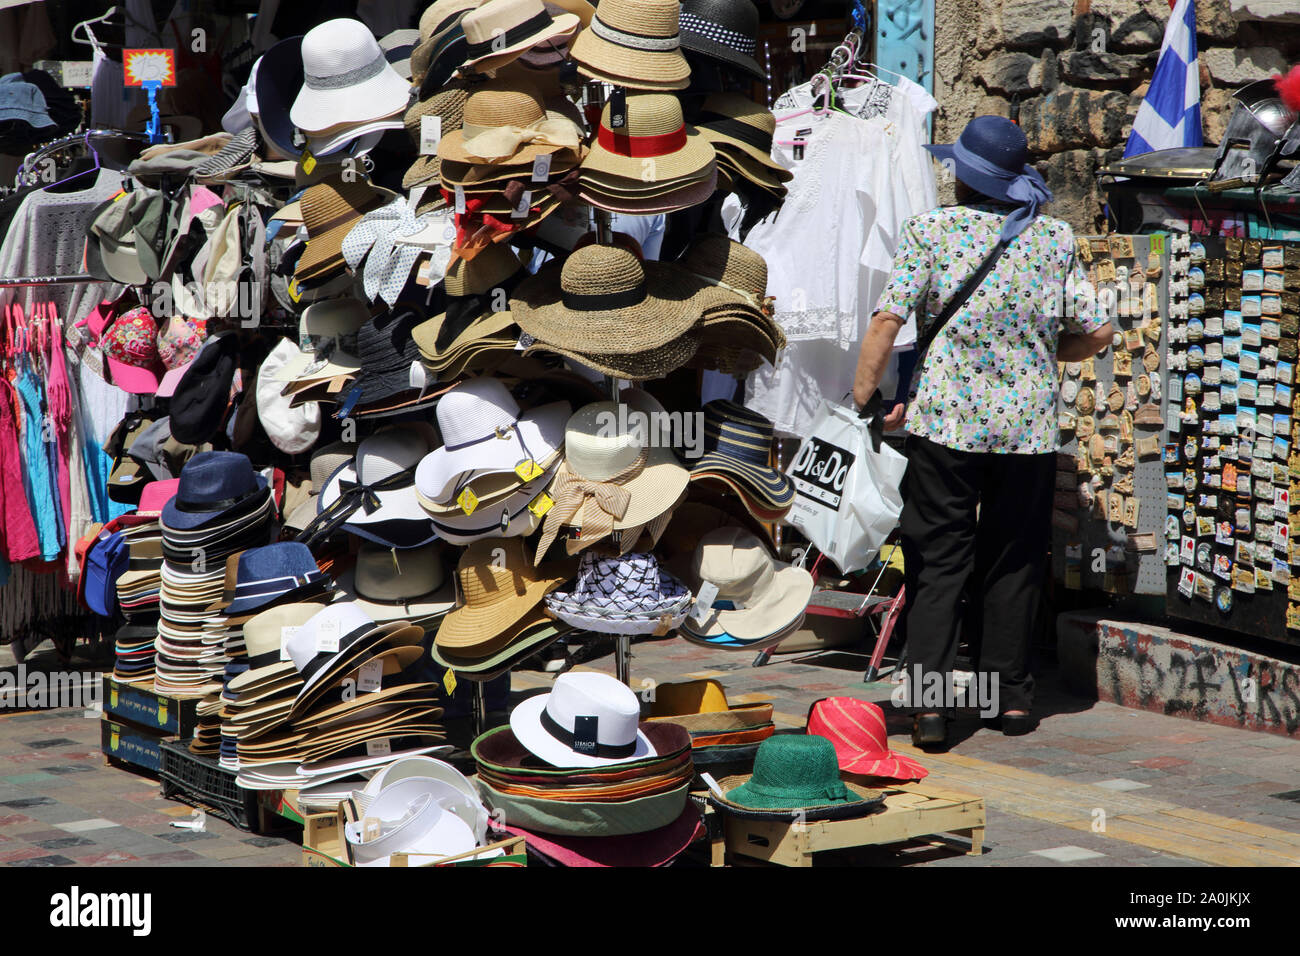 Sombreros de mercado fotografías e imágenes de alta resolución - Alamy